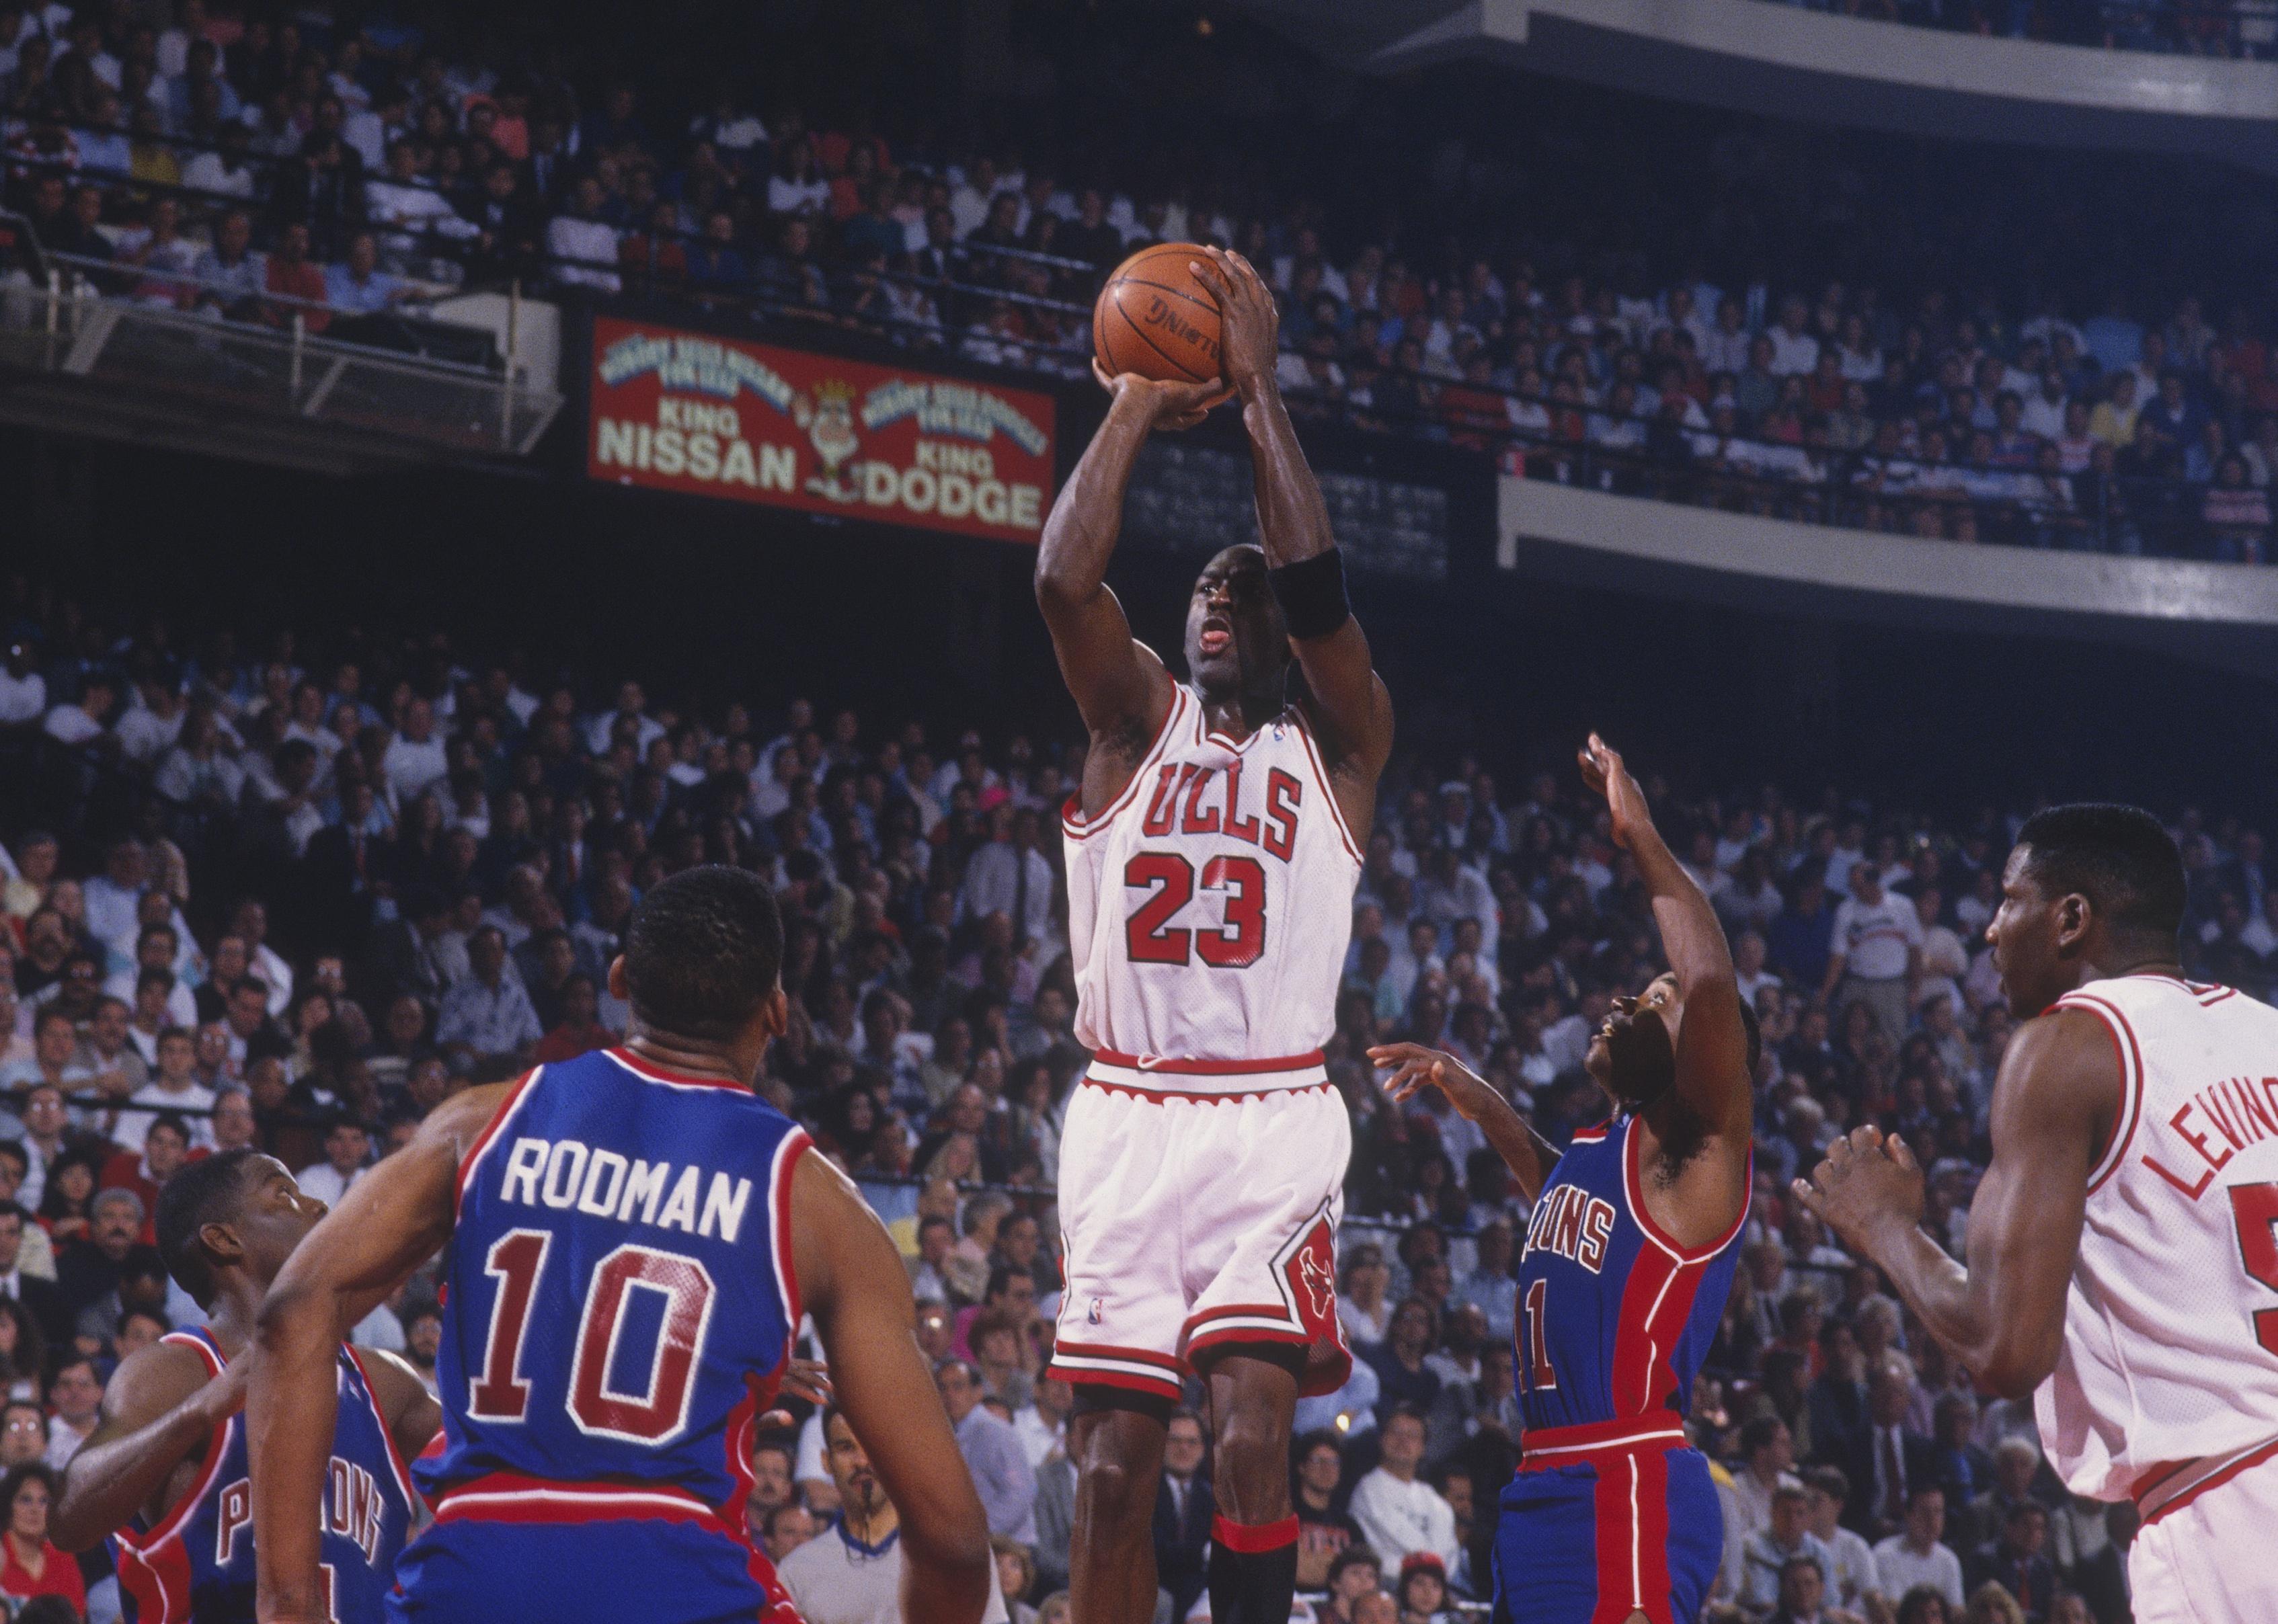 Michael Jordan of the Chicago Bulls shoots a jump shot against the Detroit Pistons.